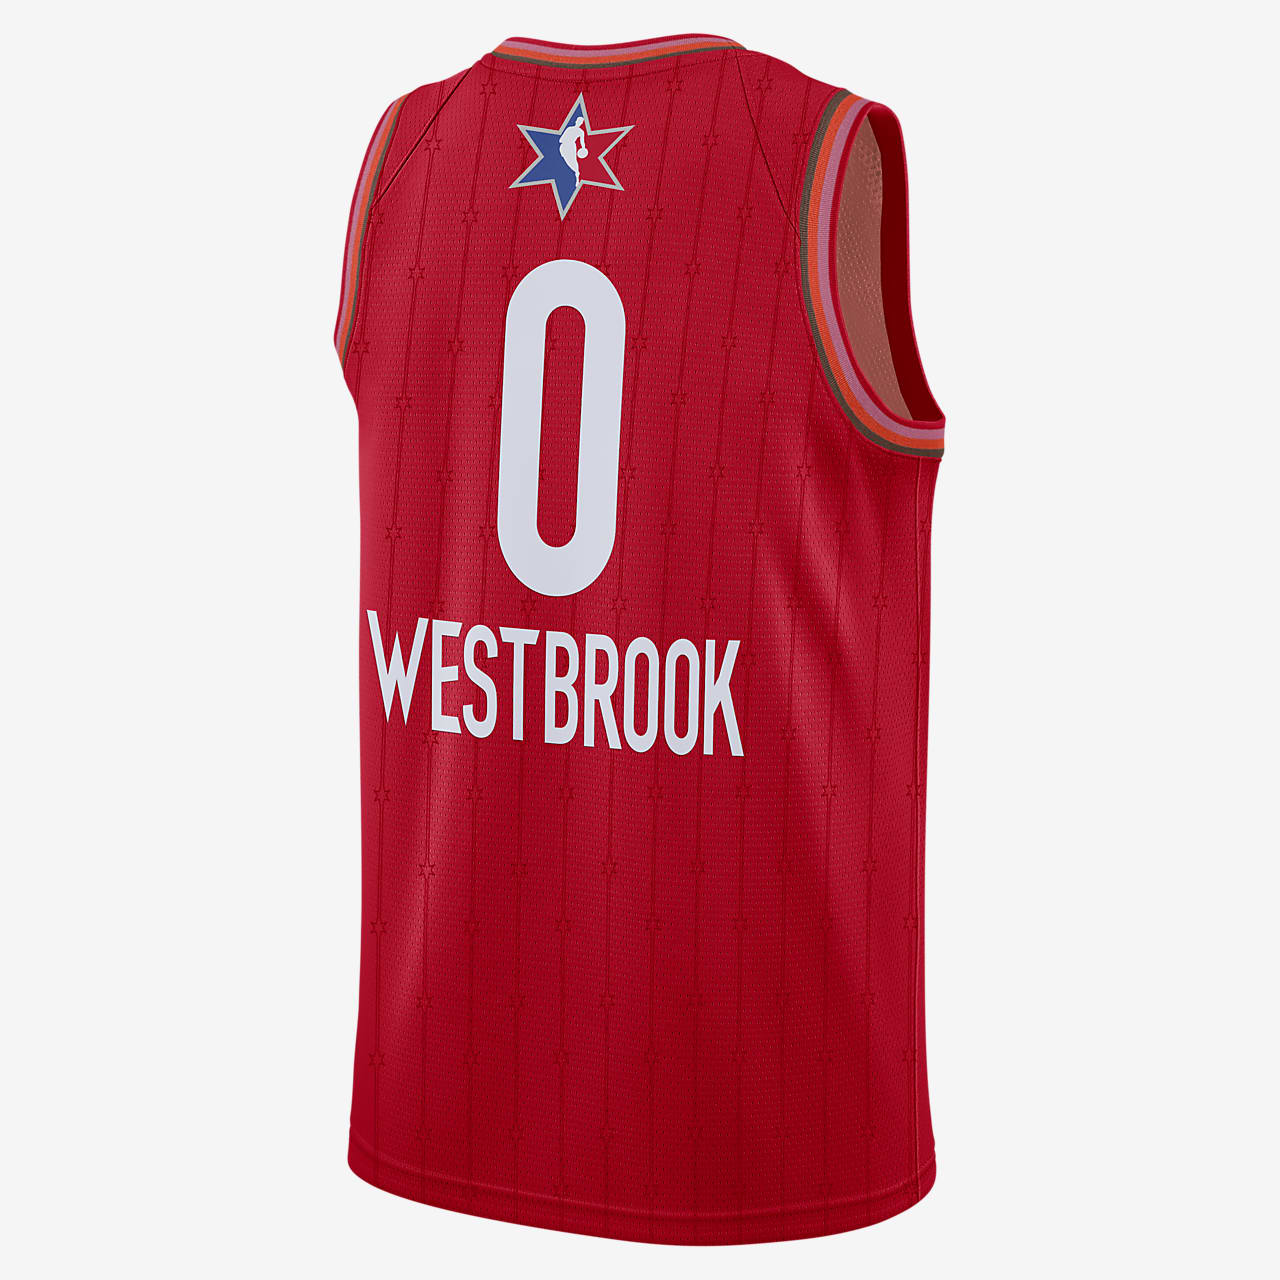 westbrook kids jersey